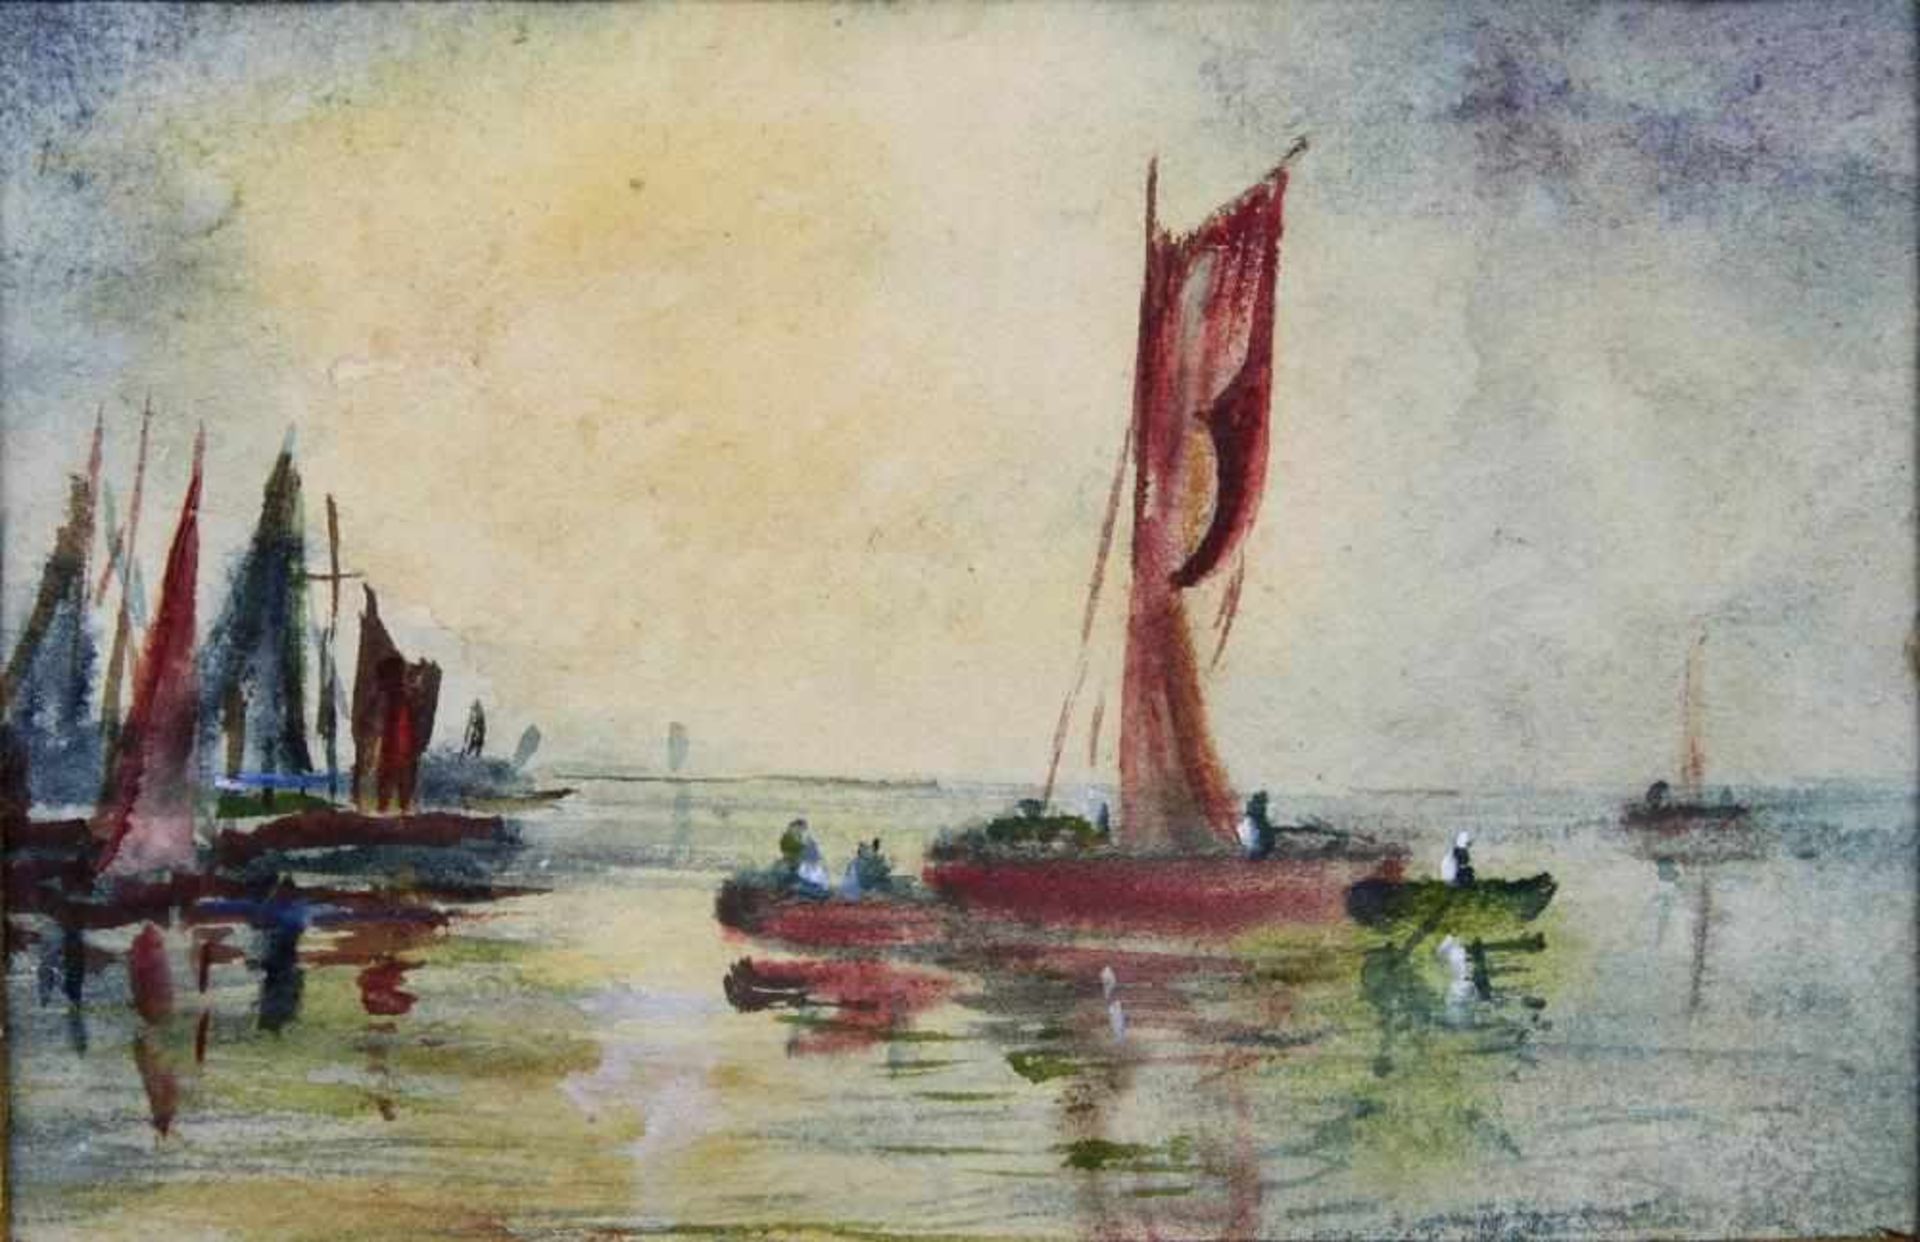 Paar Aquarelle um 1900. Zeesenboote im Bodden an der Ostsee. Aquarell auf Papier. Nicht signiert. - Bild 3 aus 4